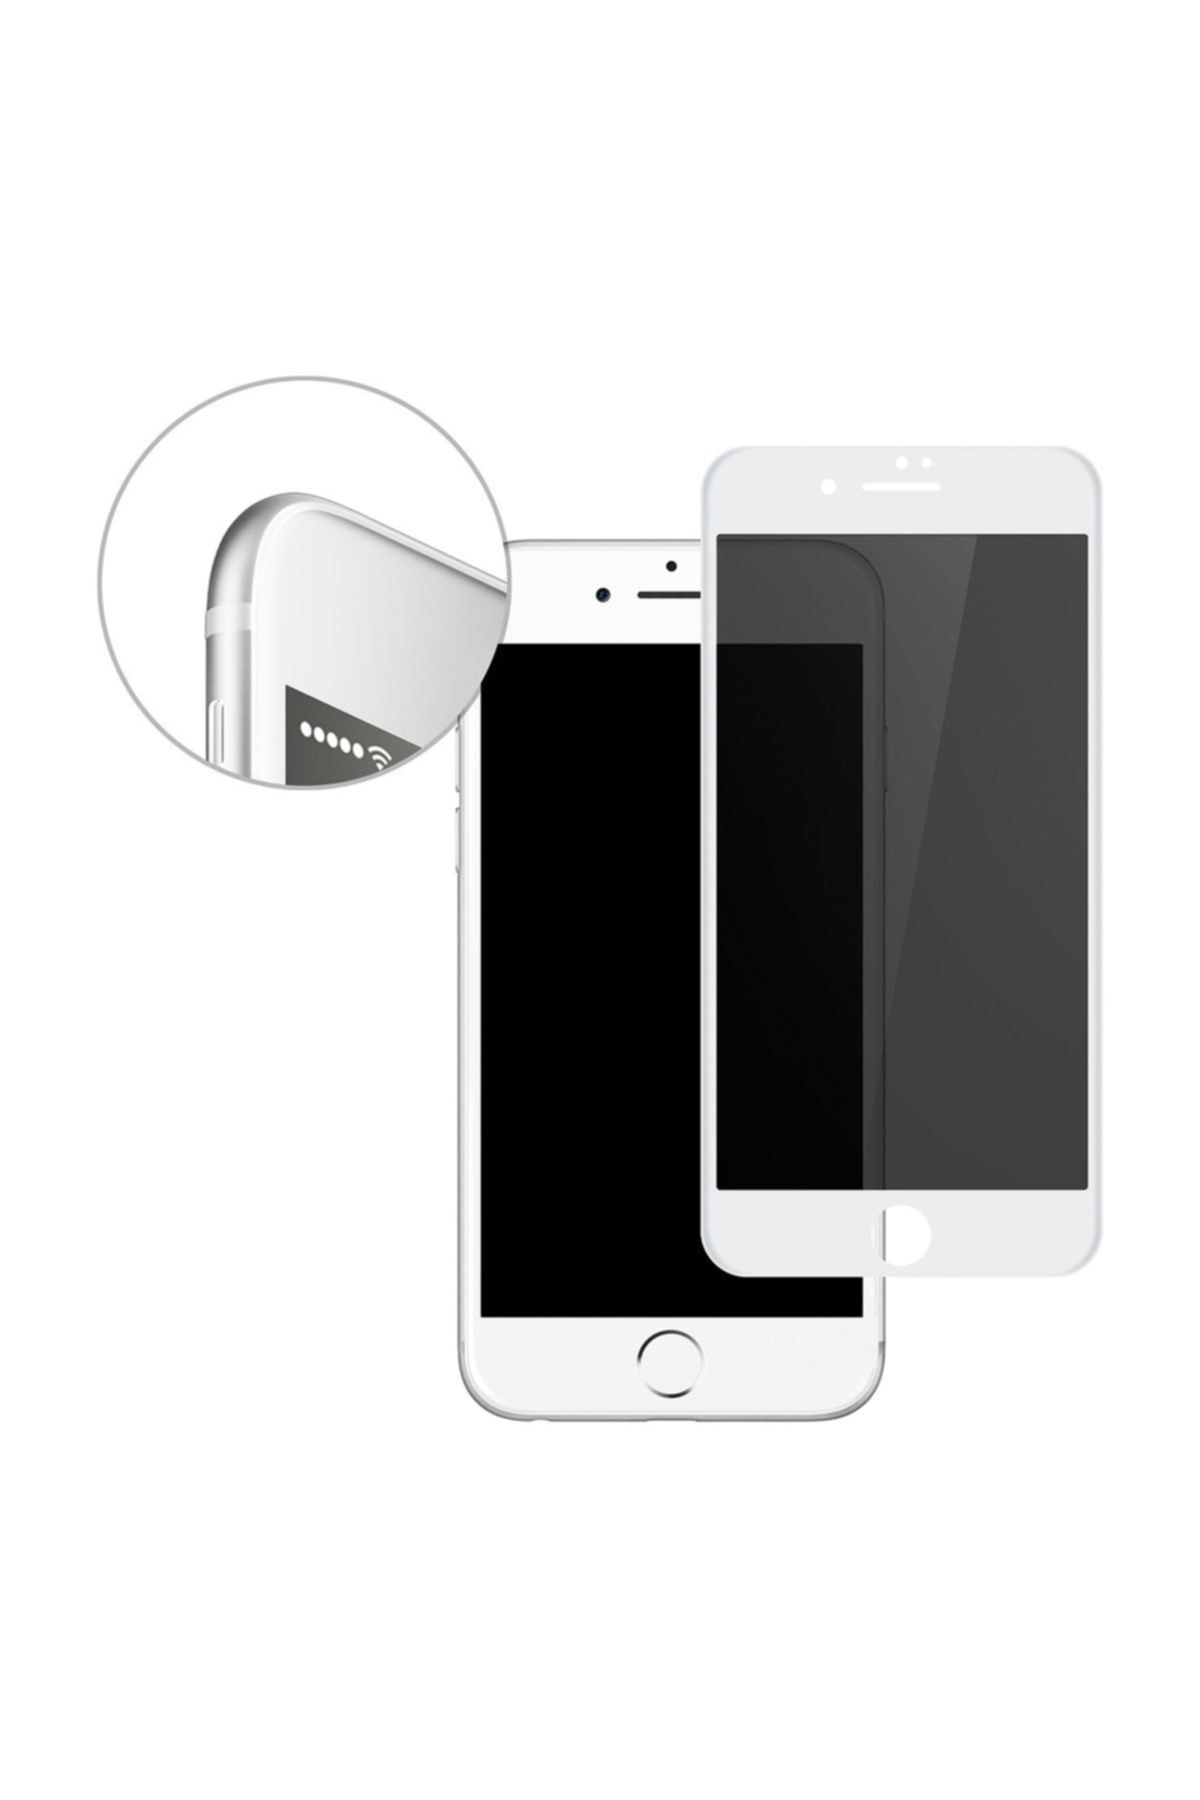 Microcase Iphone 8 Plus Privacy Gizlilik Filtreli Tam Kaplayan Tempered Cam - Beyaz